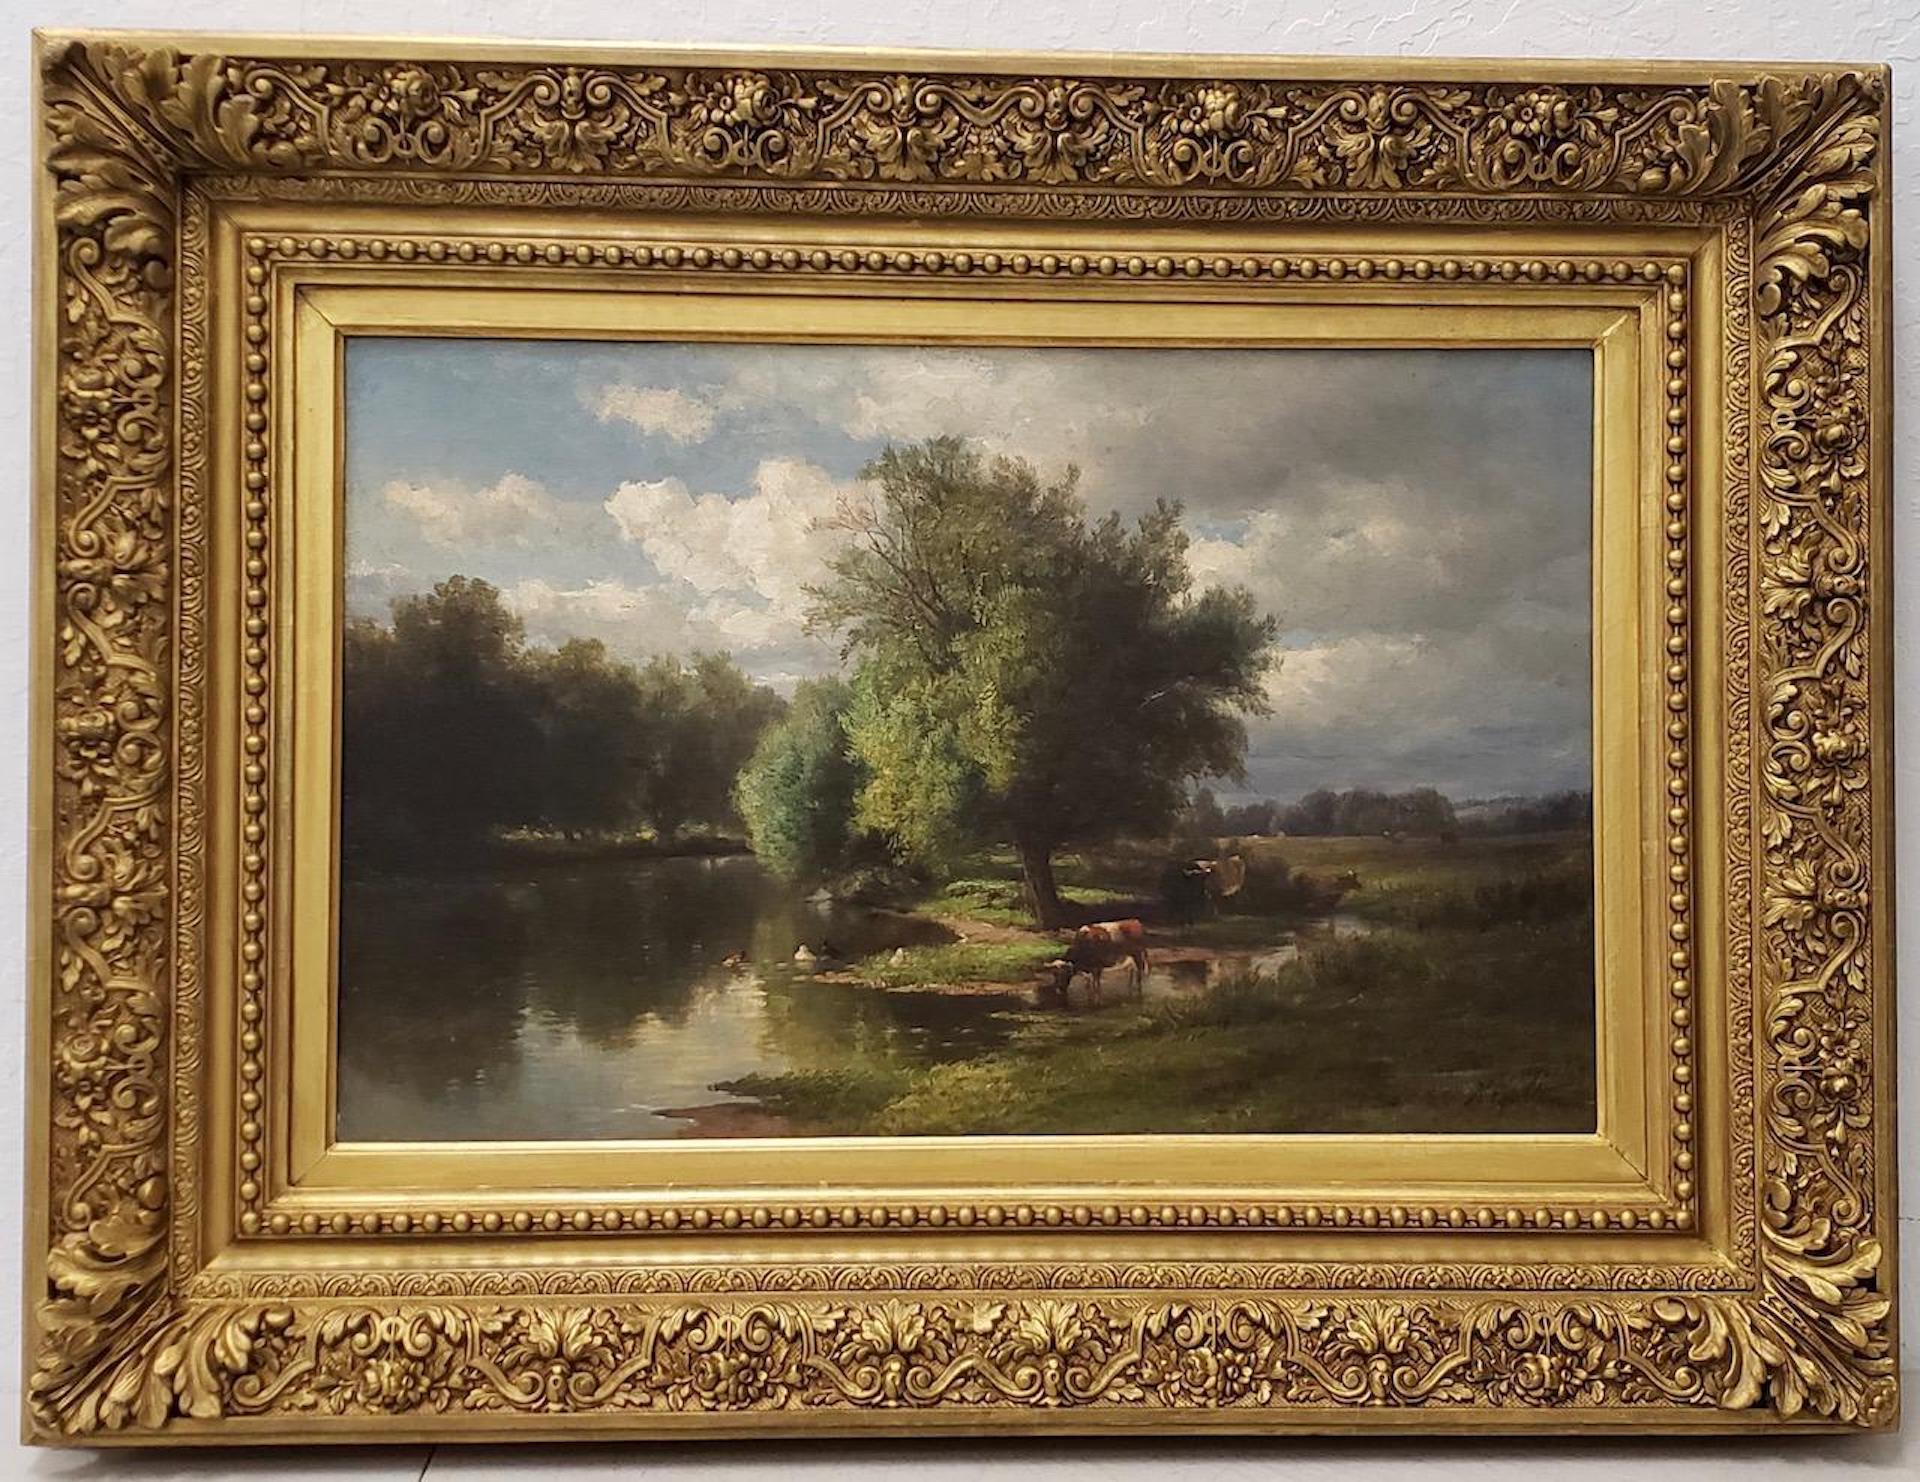 Hendrik Dirk Kruseman van Elten Landscape Painting - Hendrik-Dirk Kruseman Van Elten "Landscape with Cattle" Oil Painting c.1890